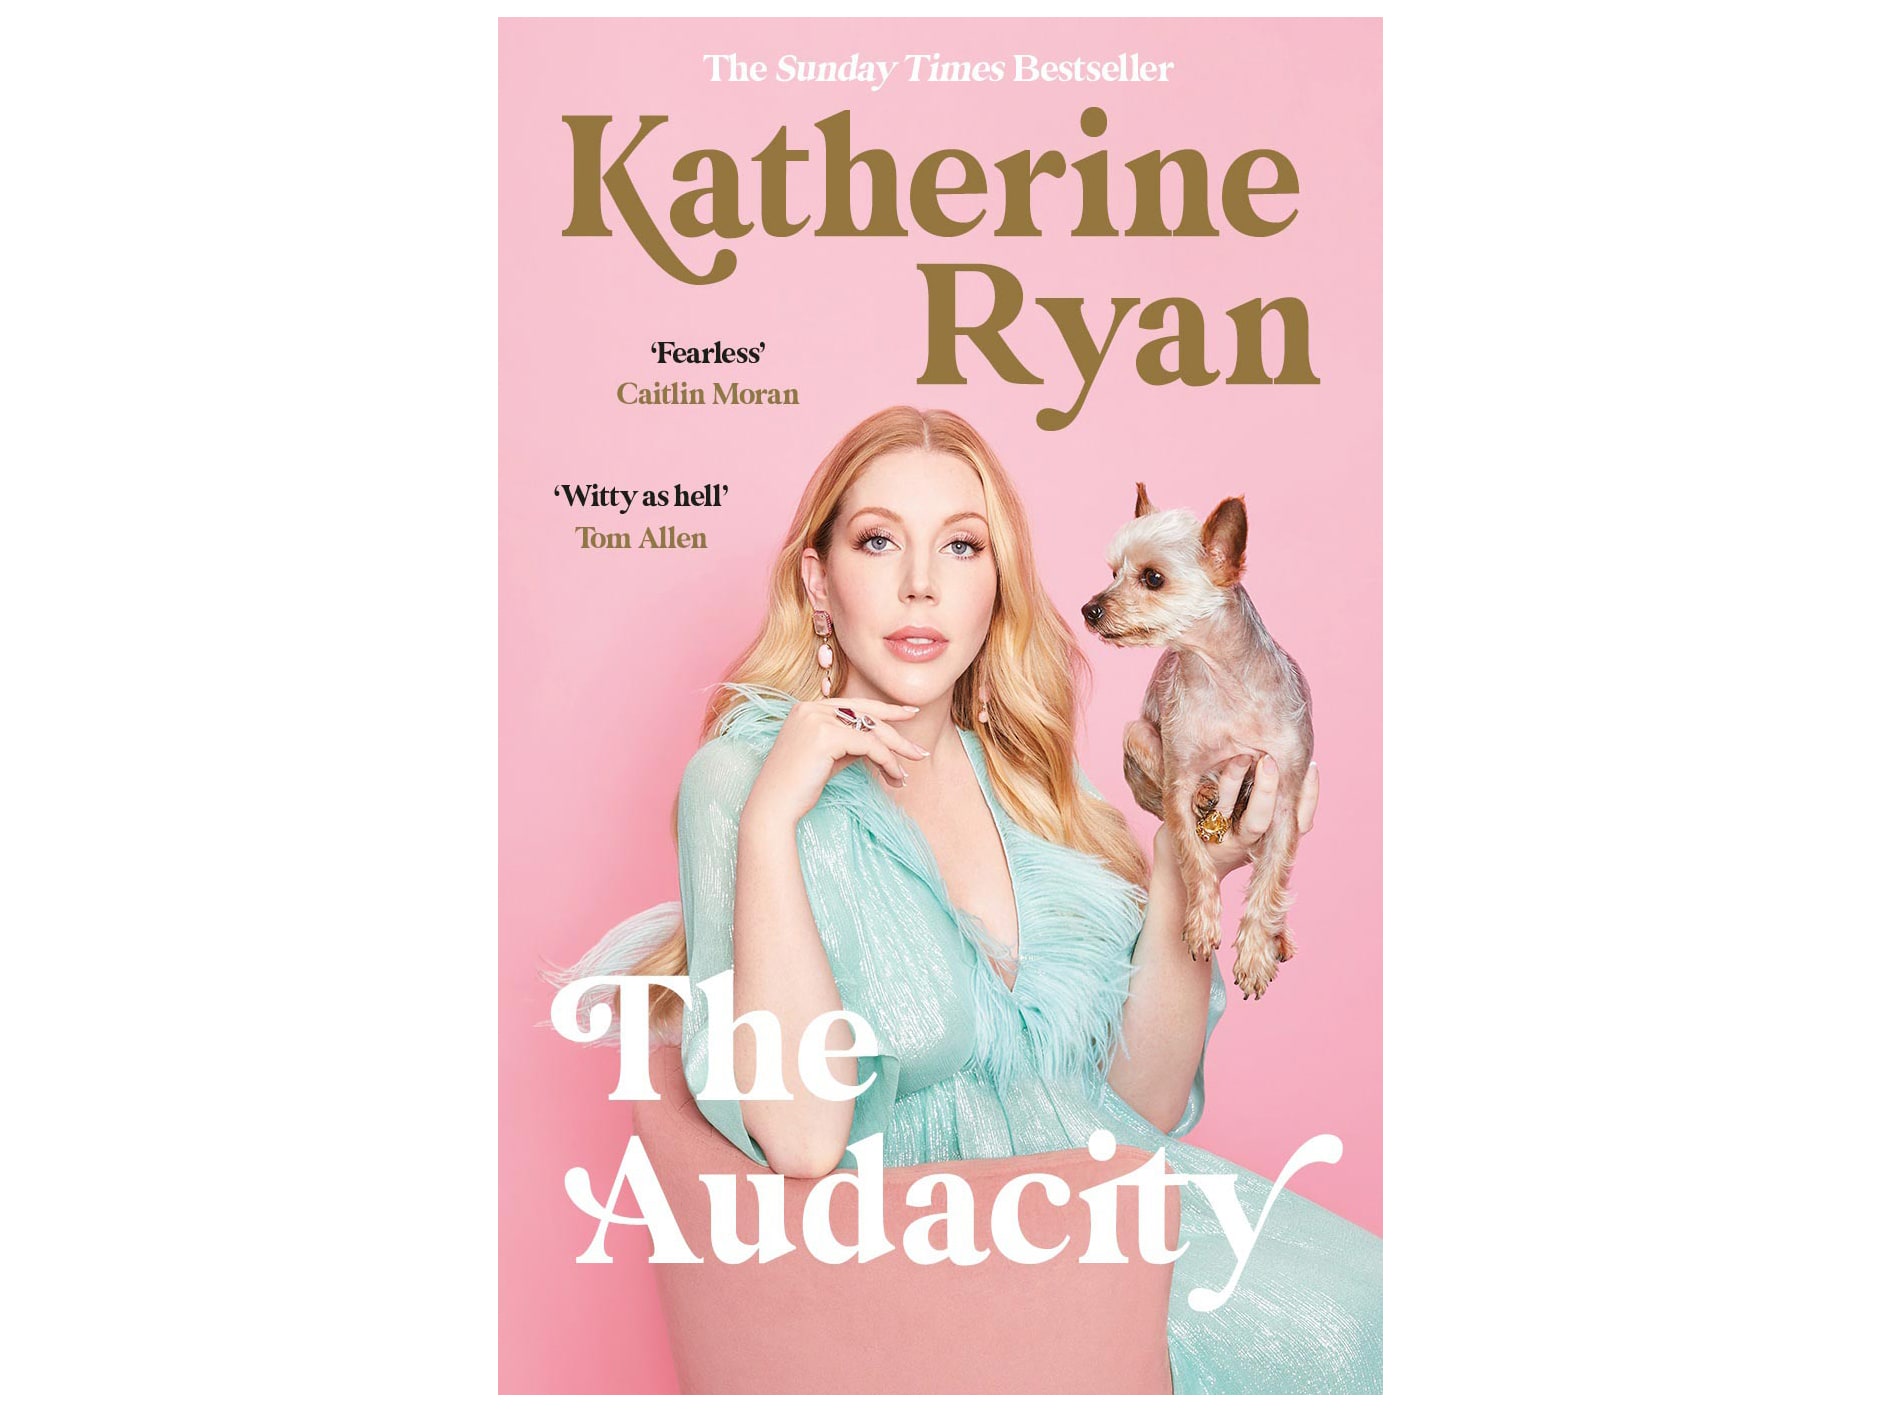 The Audacity by Katherine Ryan, Blink, $33